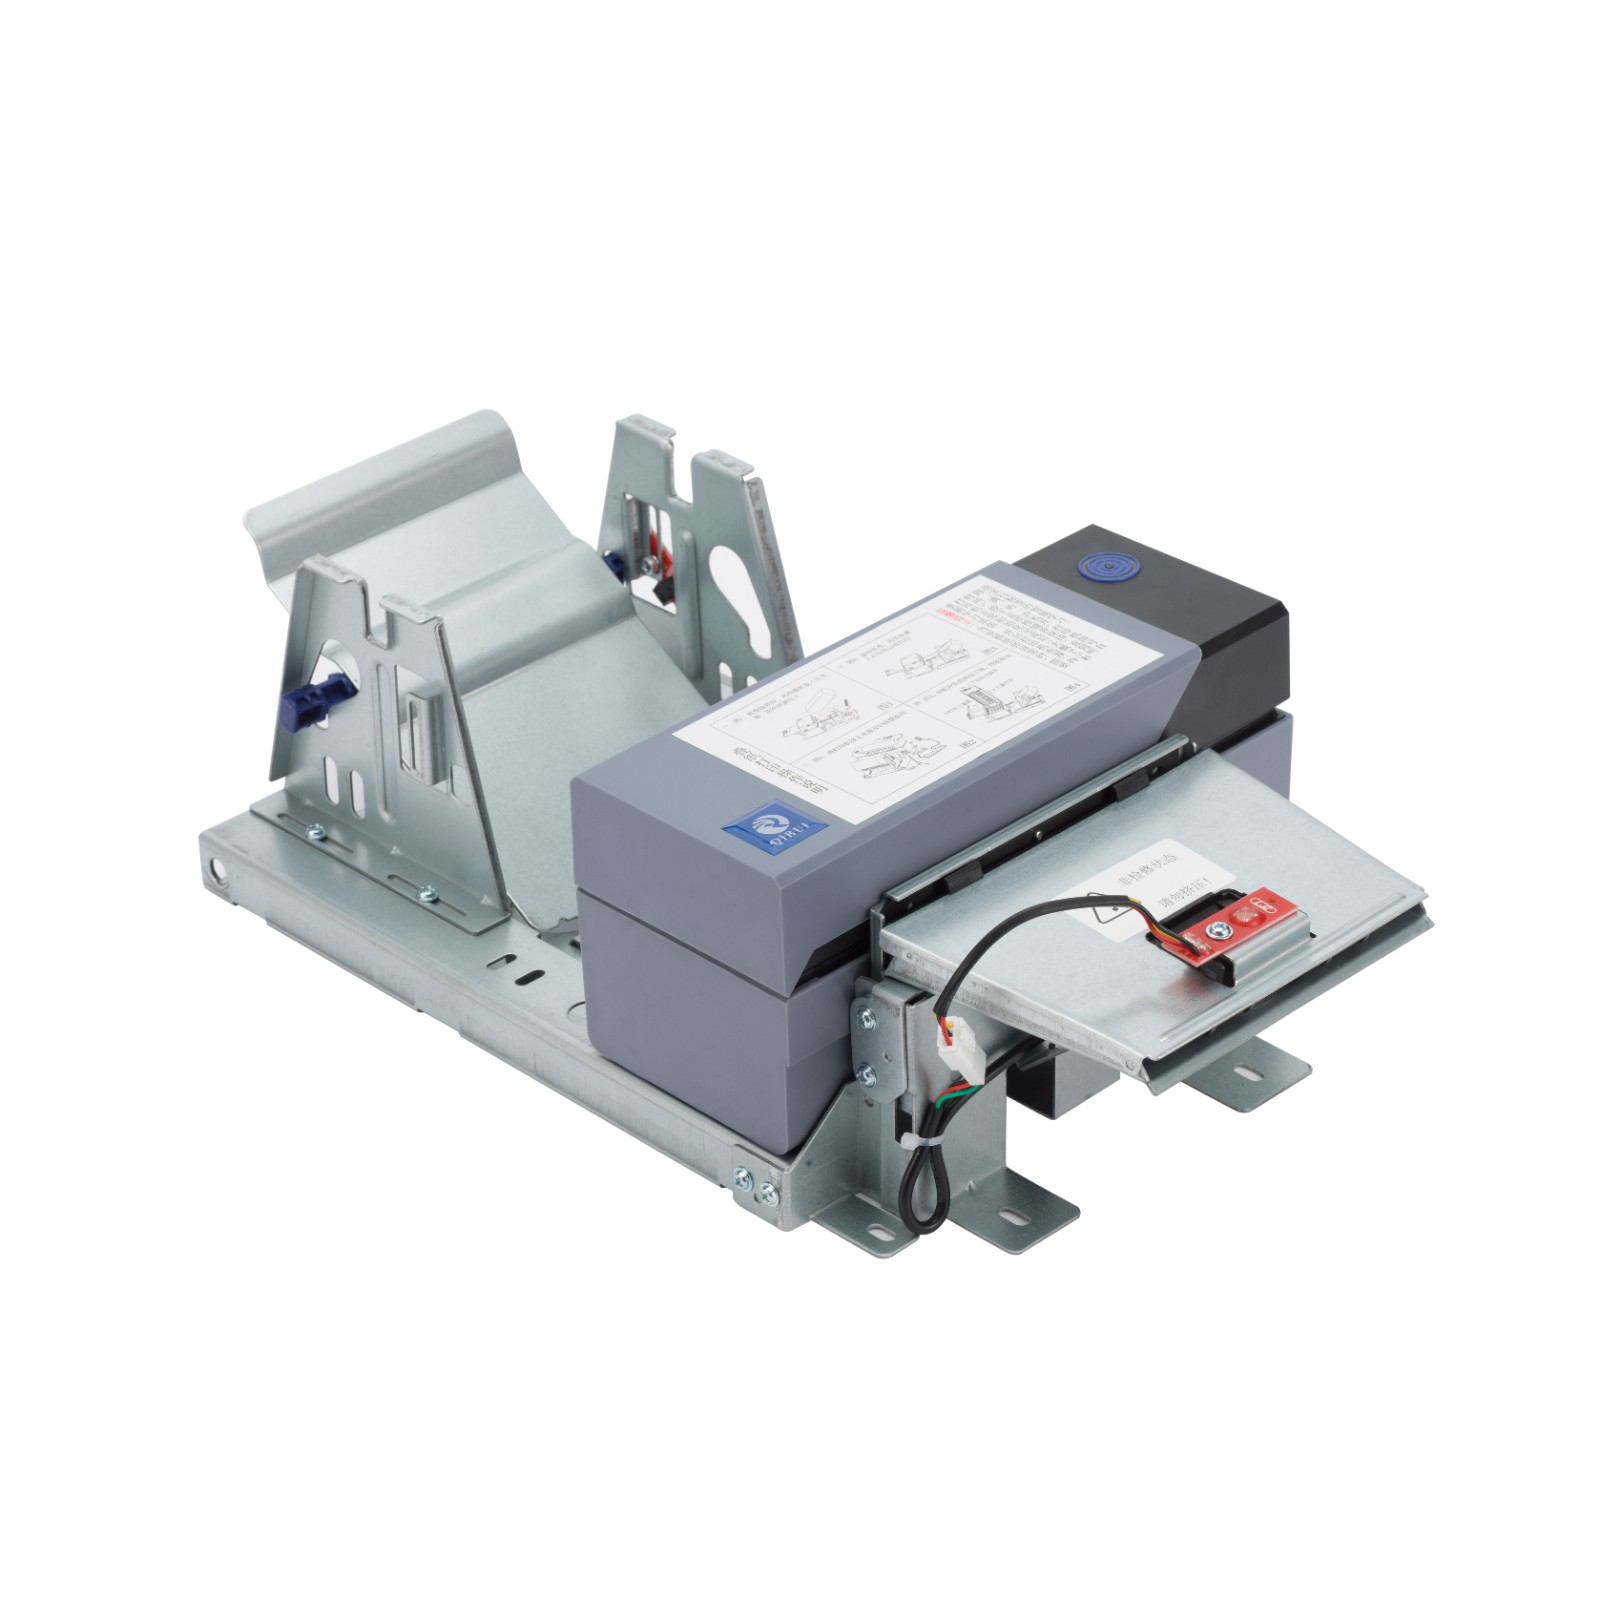 Impresora de etiquetas de quiosco integrada de 4 pulgadas con cortador automático
